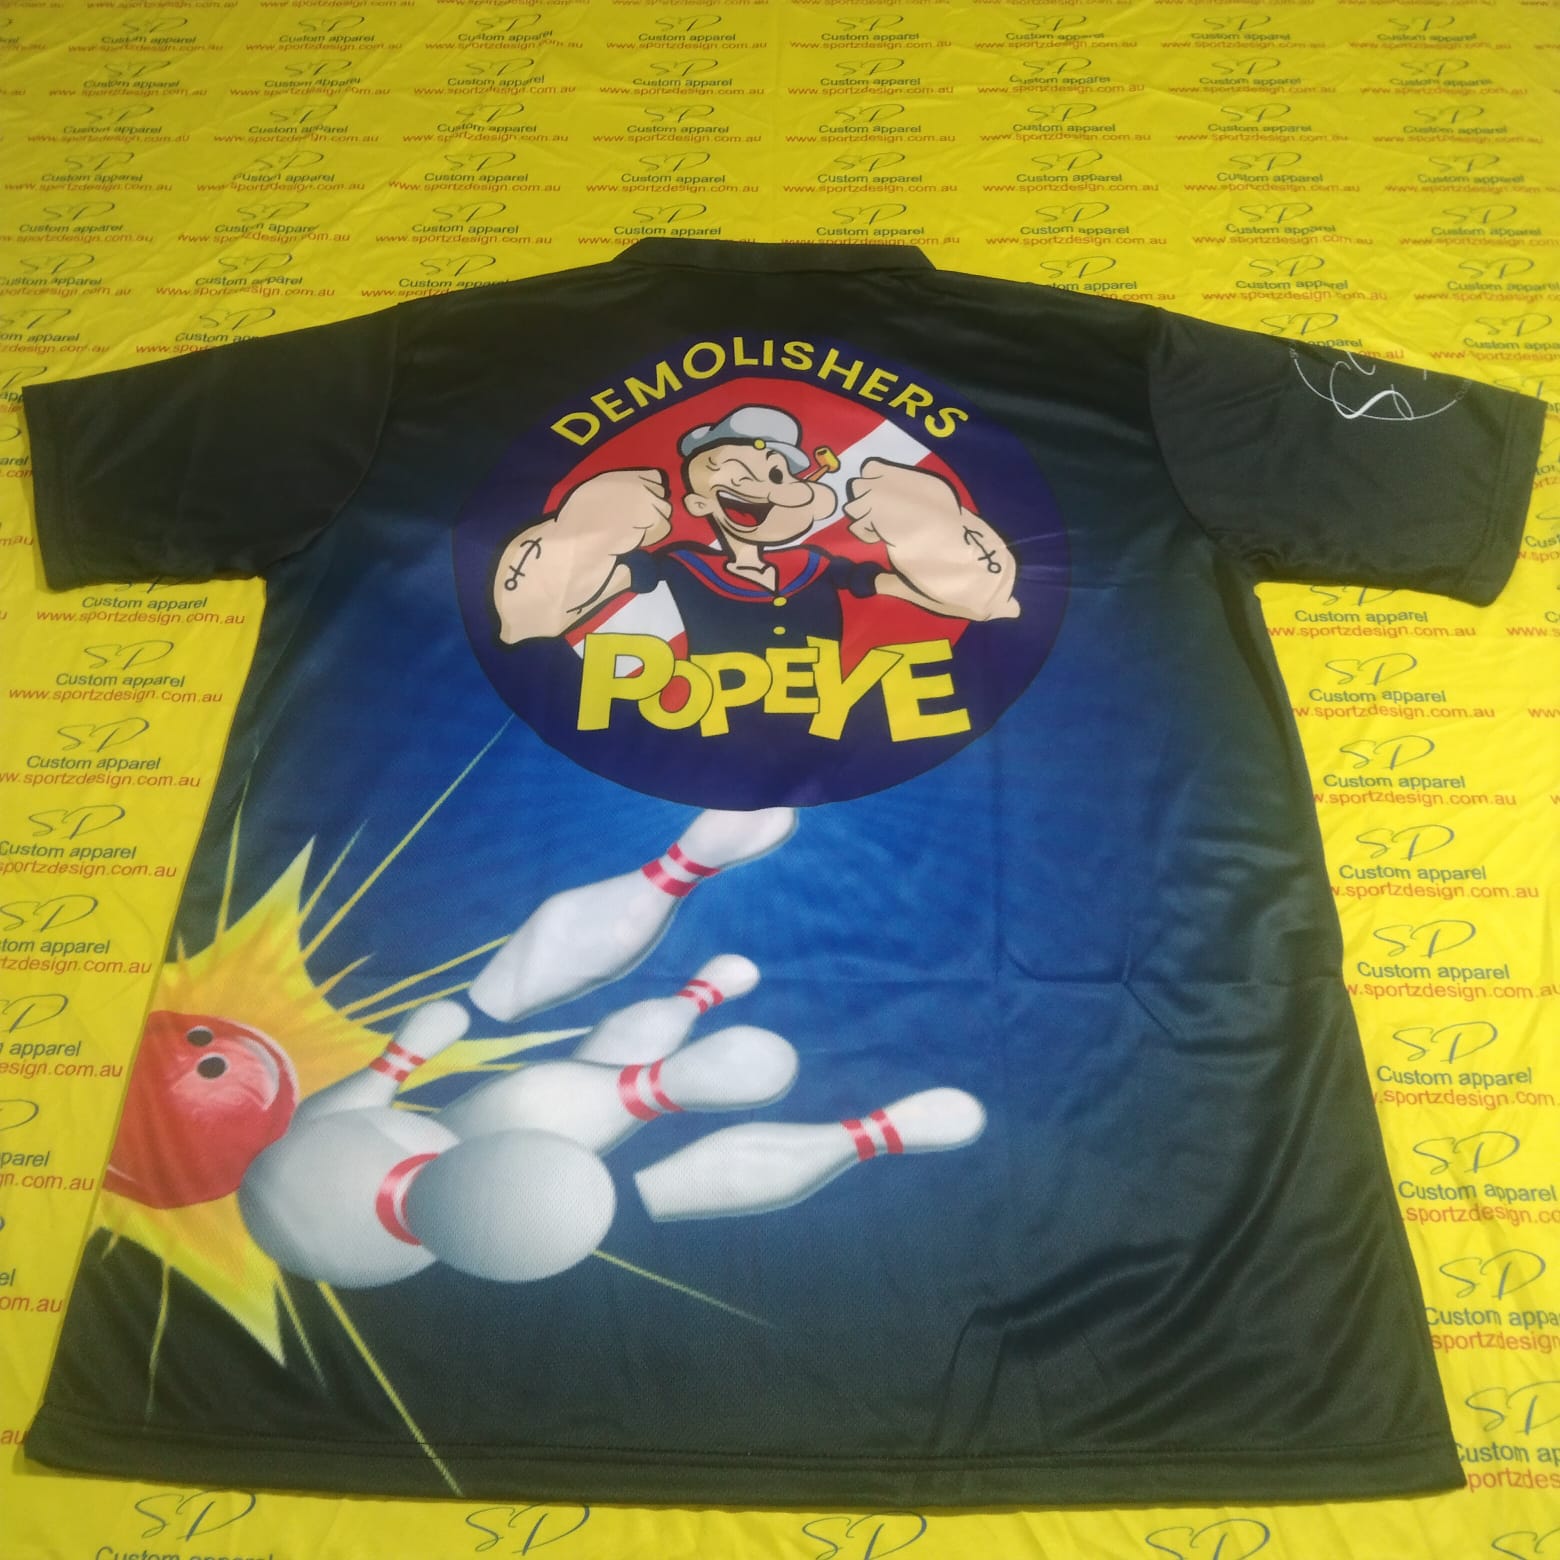 Tenpin Popeye Shirt